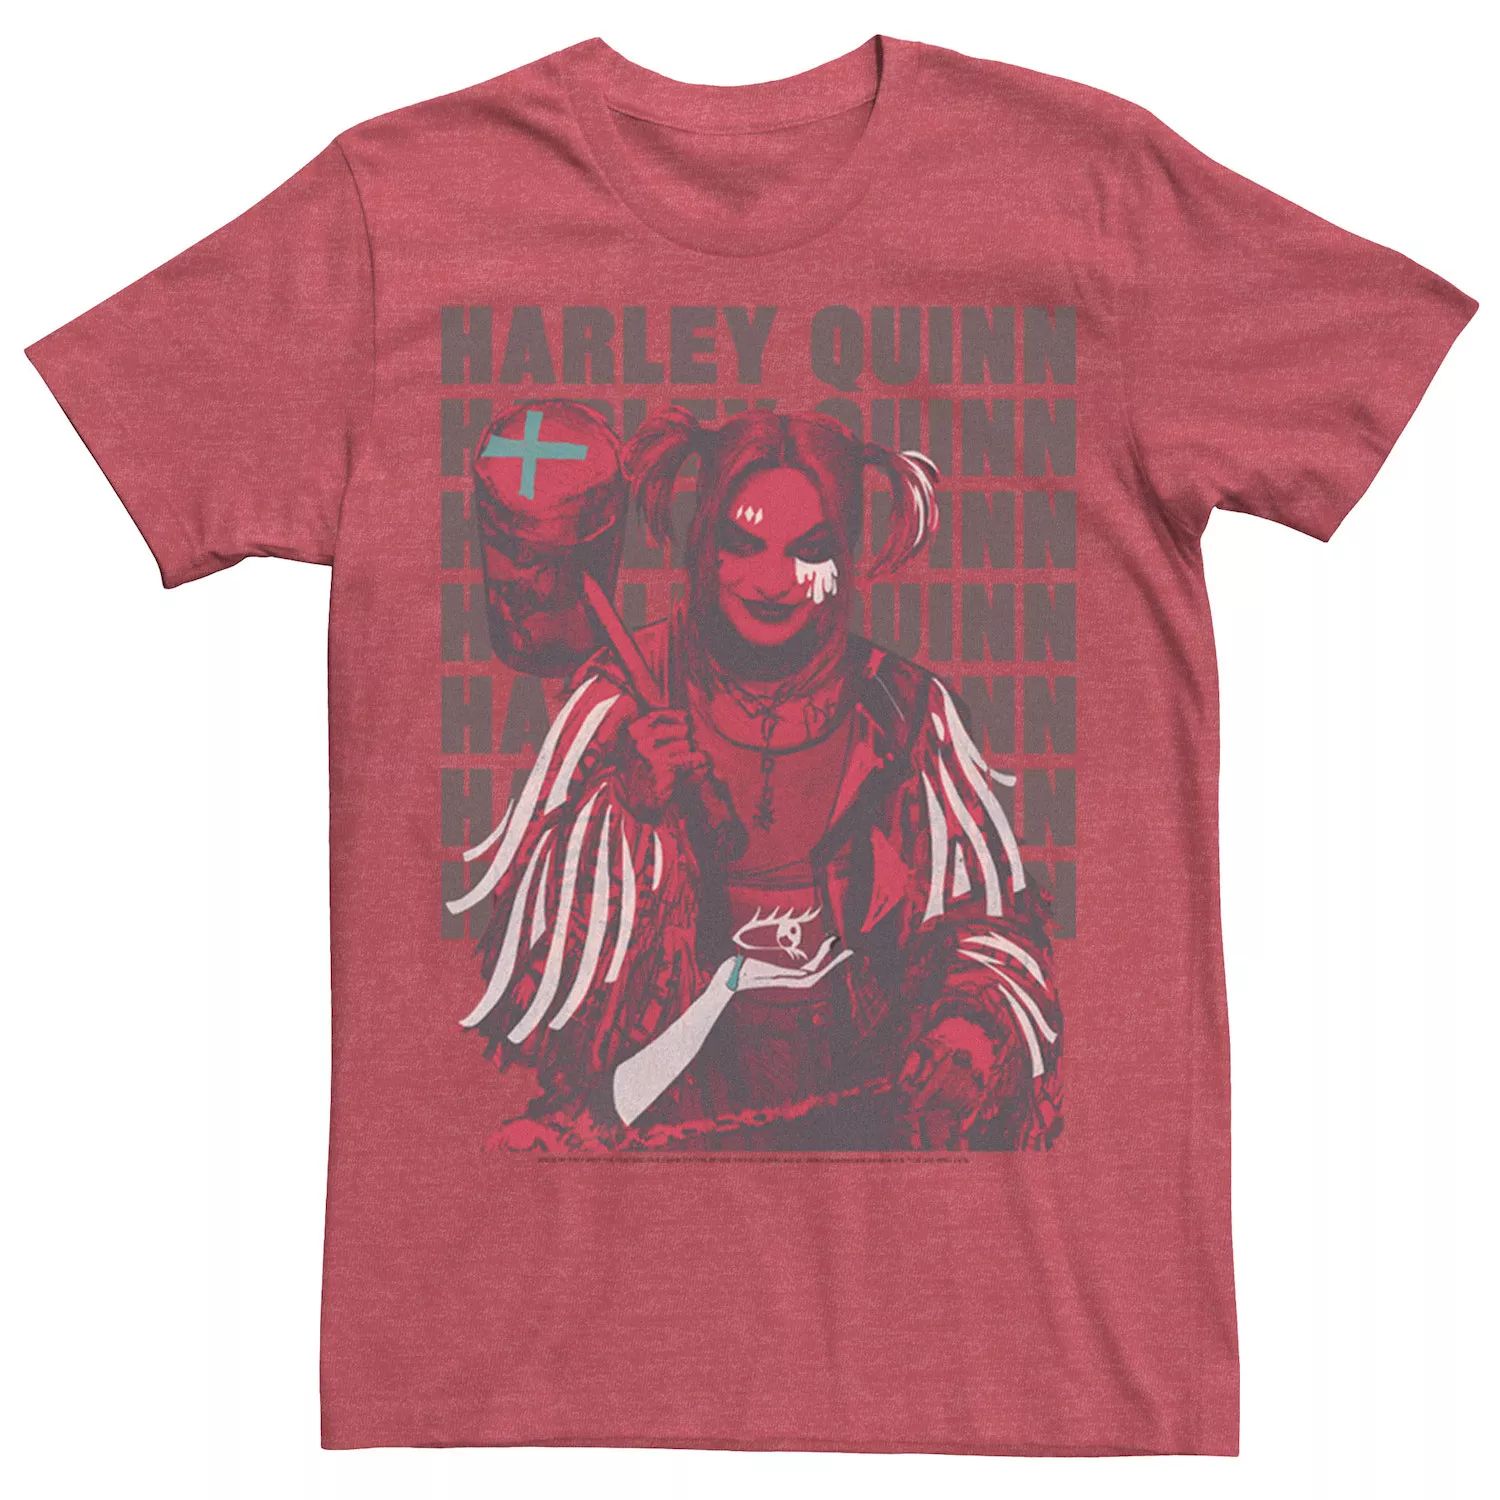 Мужская футболка Harley Quinn: Birds of Prey с надписью Licensed Character printio футболка с полной запечаткой мужская birds of prey